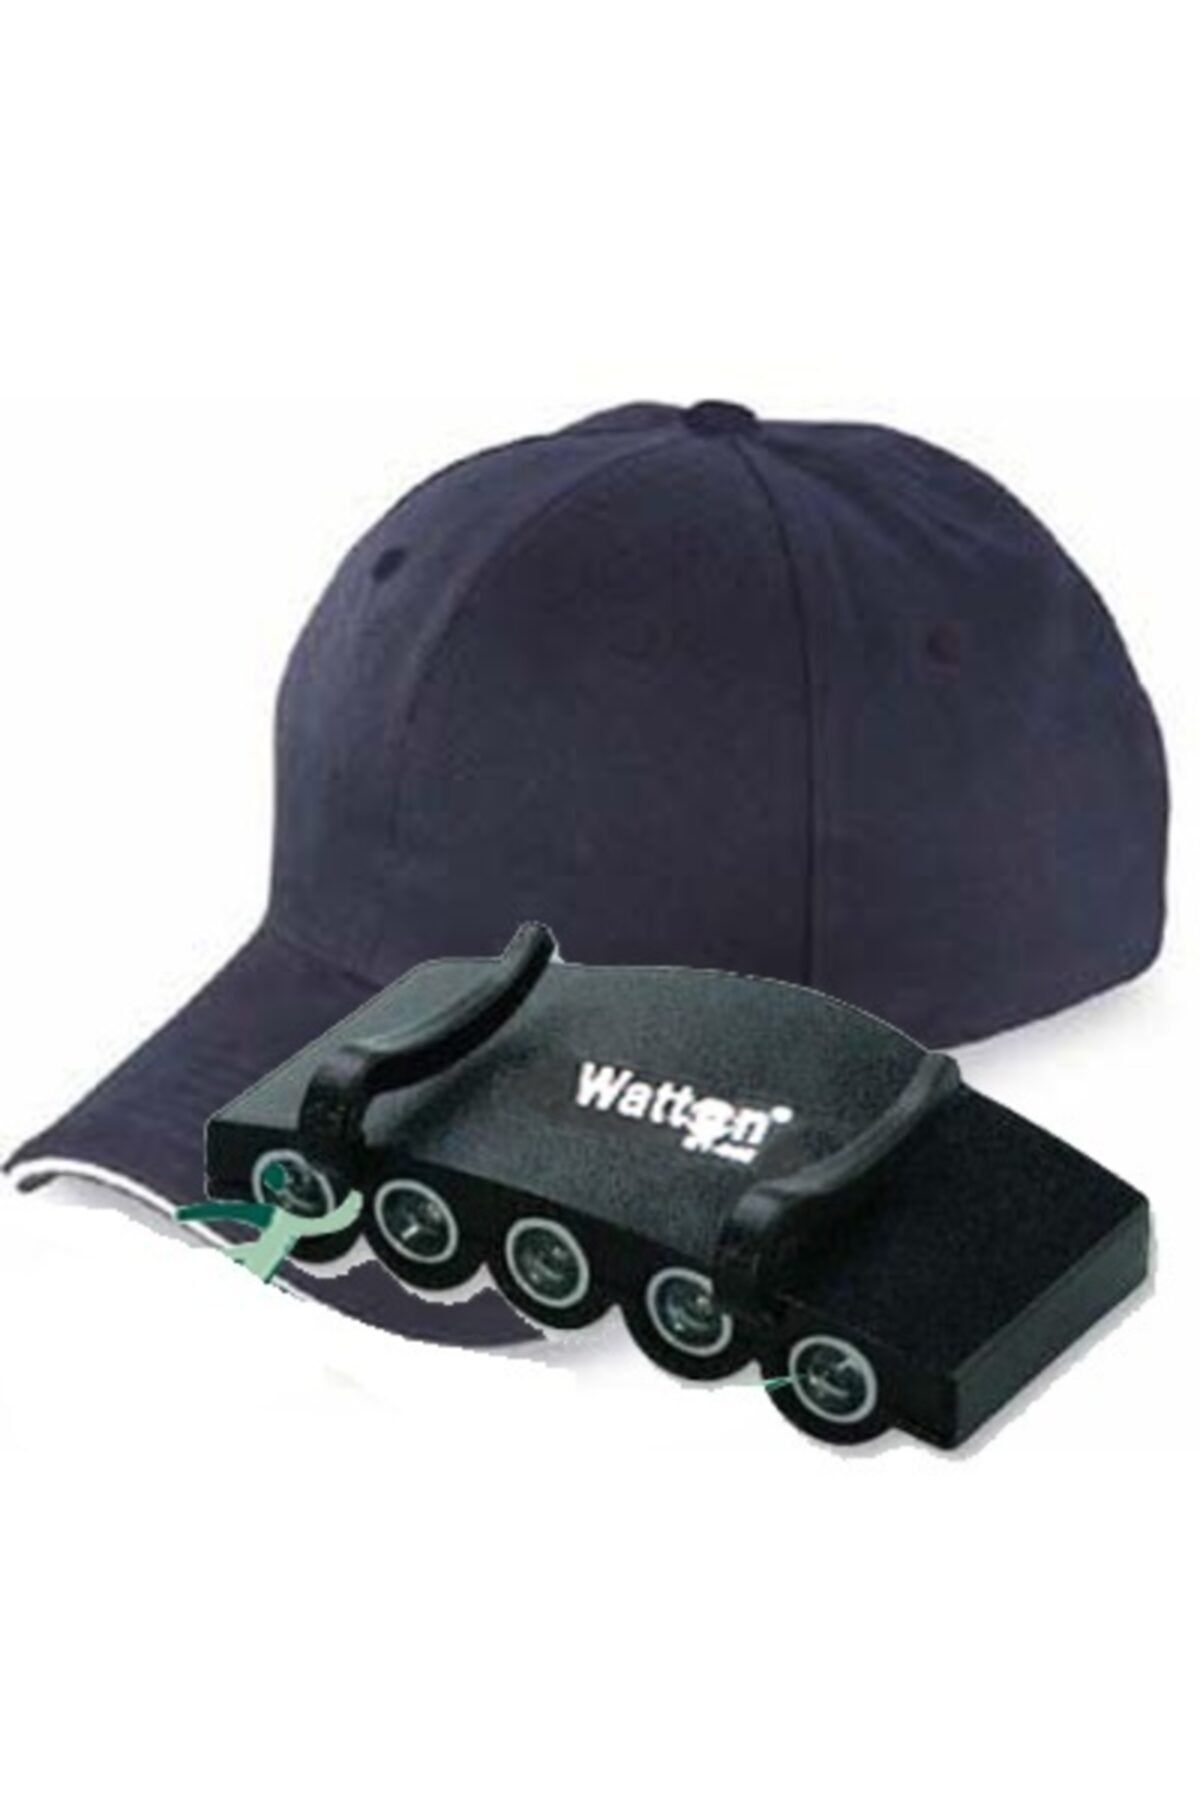 Watton Şapka Lambası Wt-127